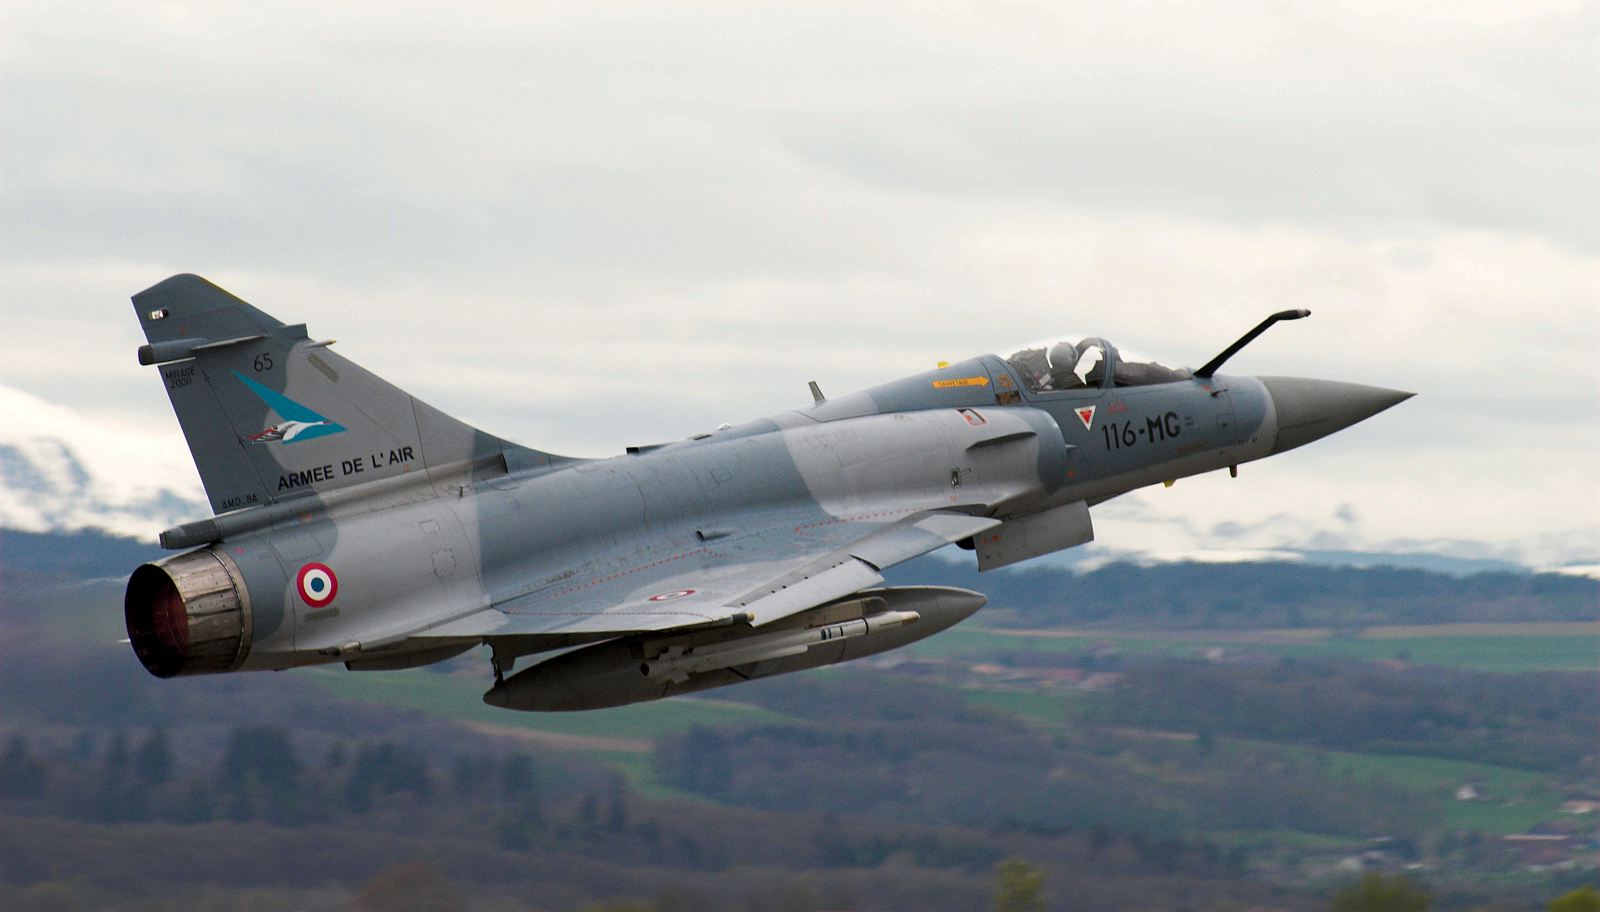 Mirage 2000 65/116-MG